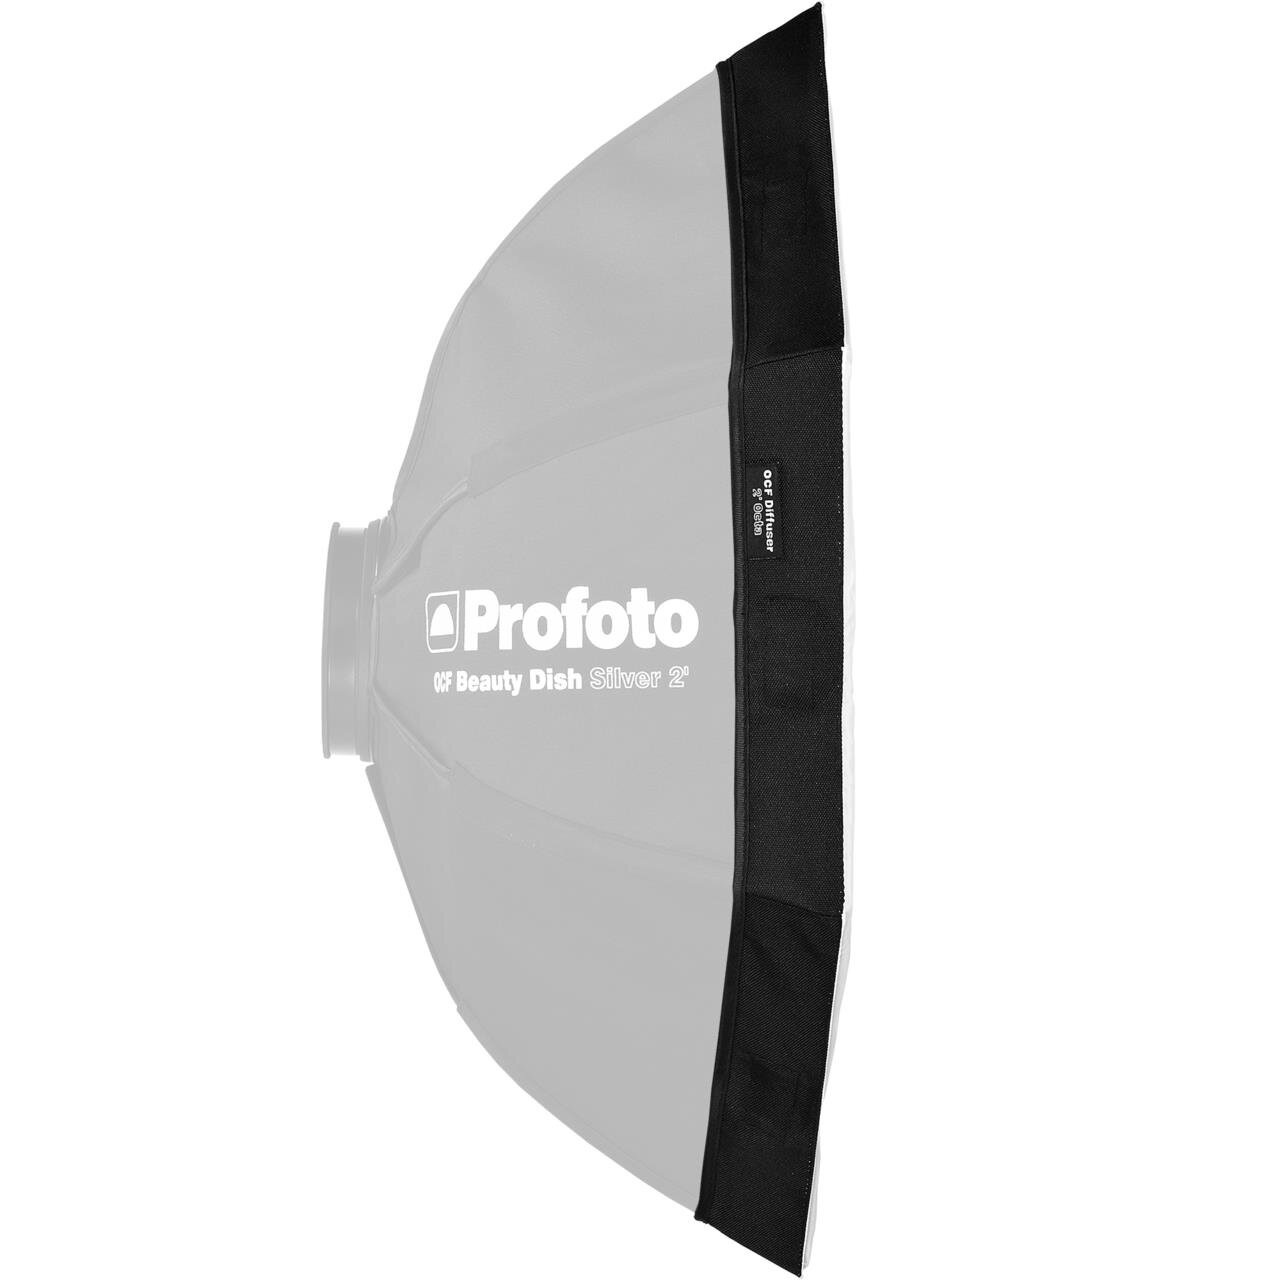 101220-101221_a_profoto-ocf-beauty-dish-diffuser-profile_productimage2.png.jpeg